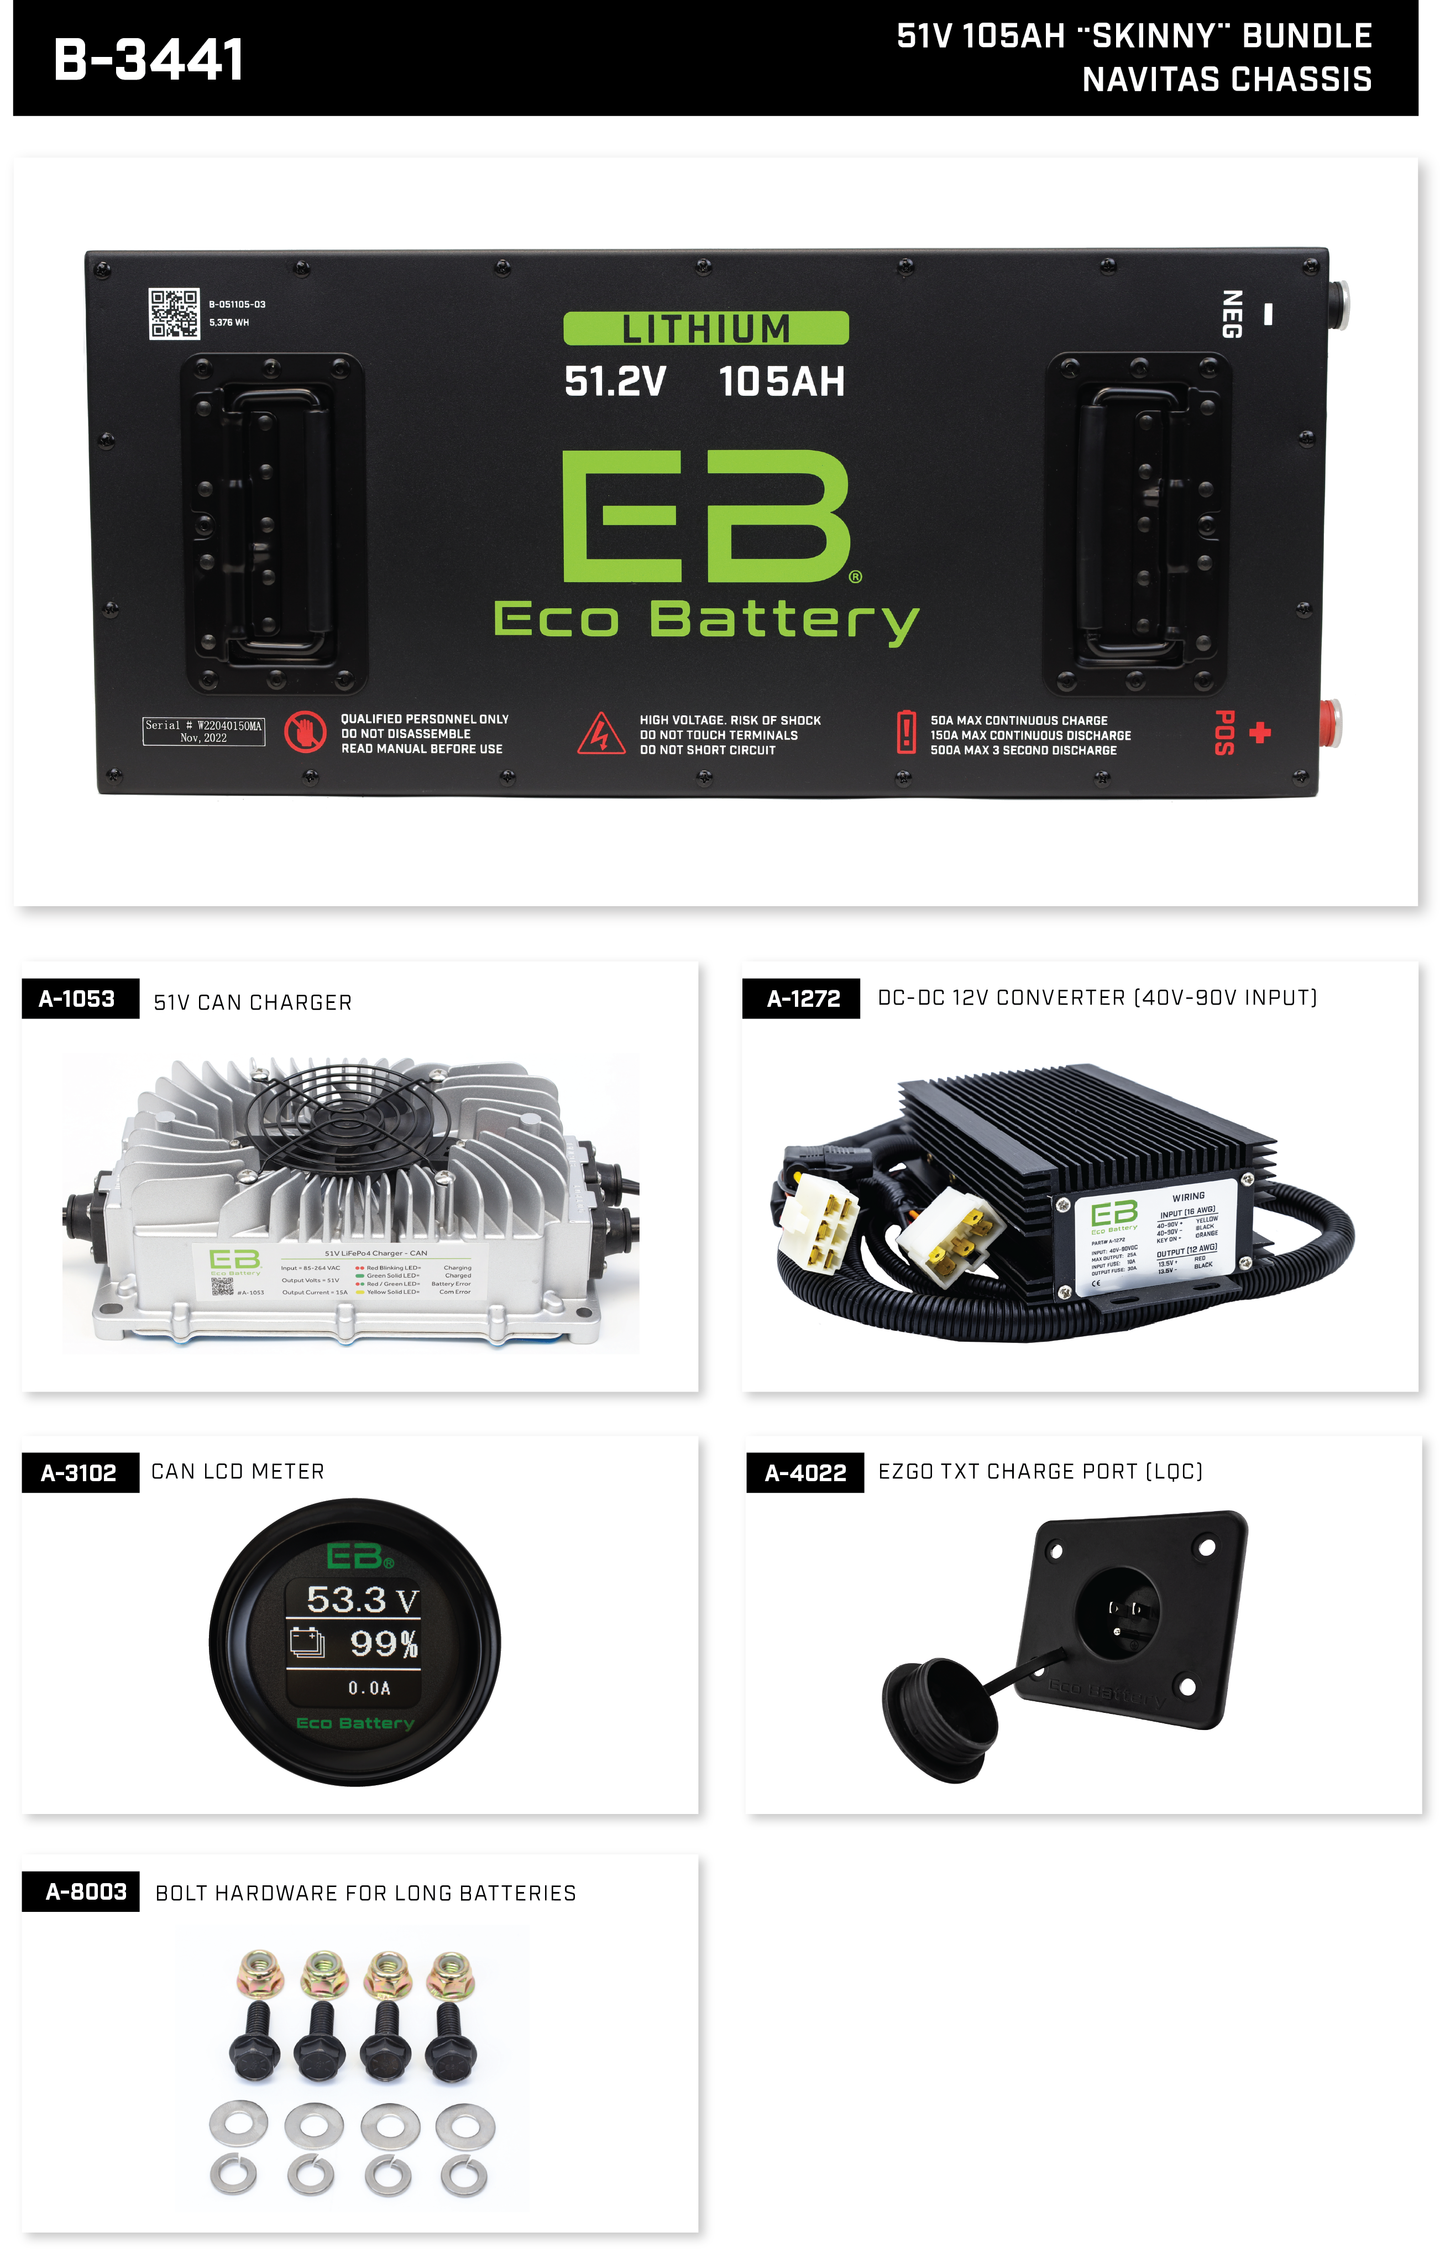 Eco Battery 48V (51v) 105Ah "Skinny" LifePo4 Golf Cart Lithium Battery Bundle